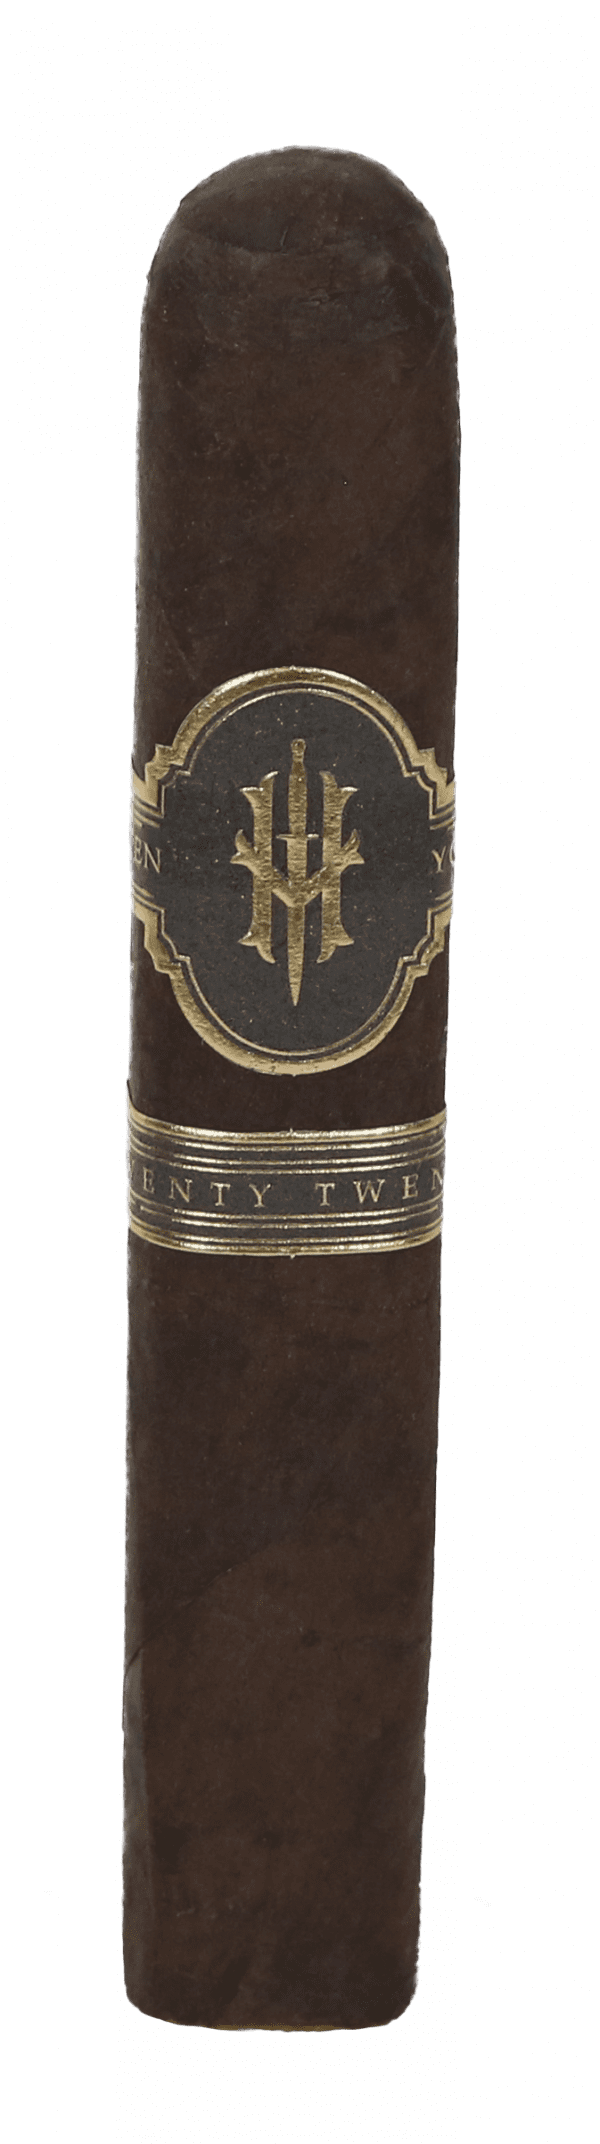 Single Hooten Young Robusto cigar